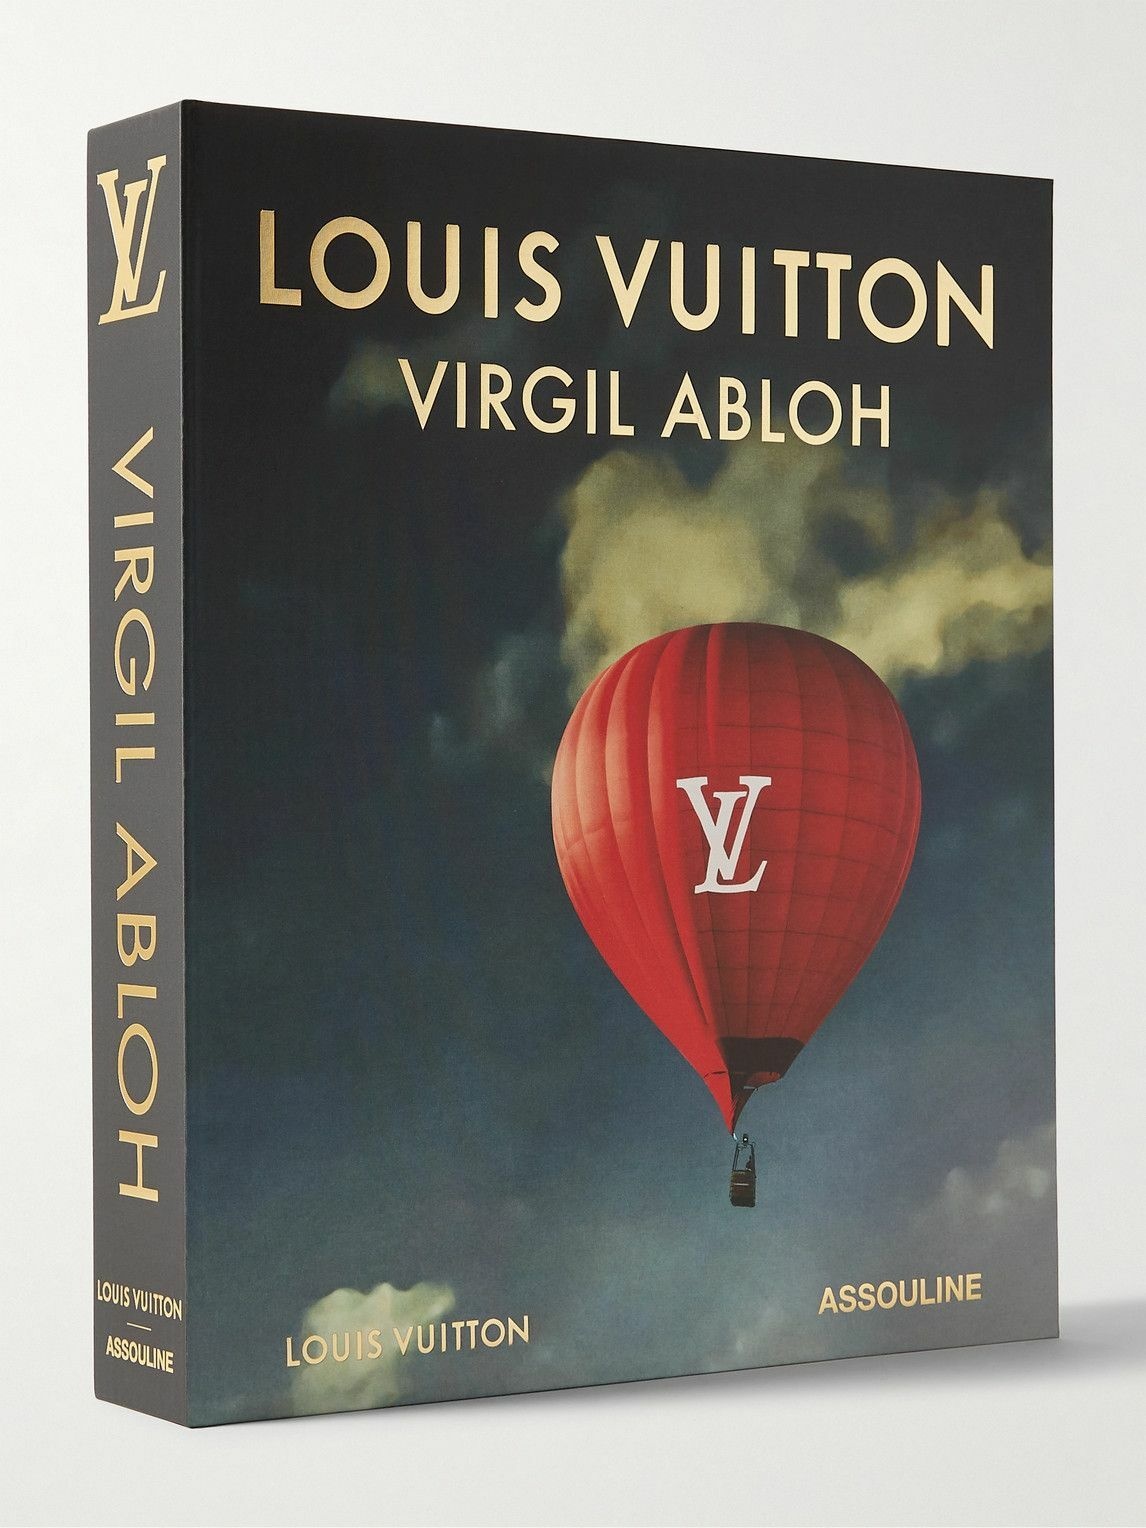 Louis Vuitton Virgil Abloh Balloon Hardcover Book by Assouline